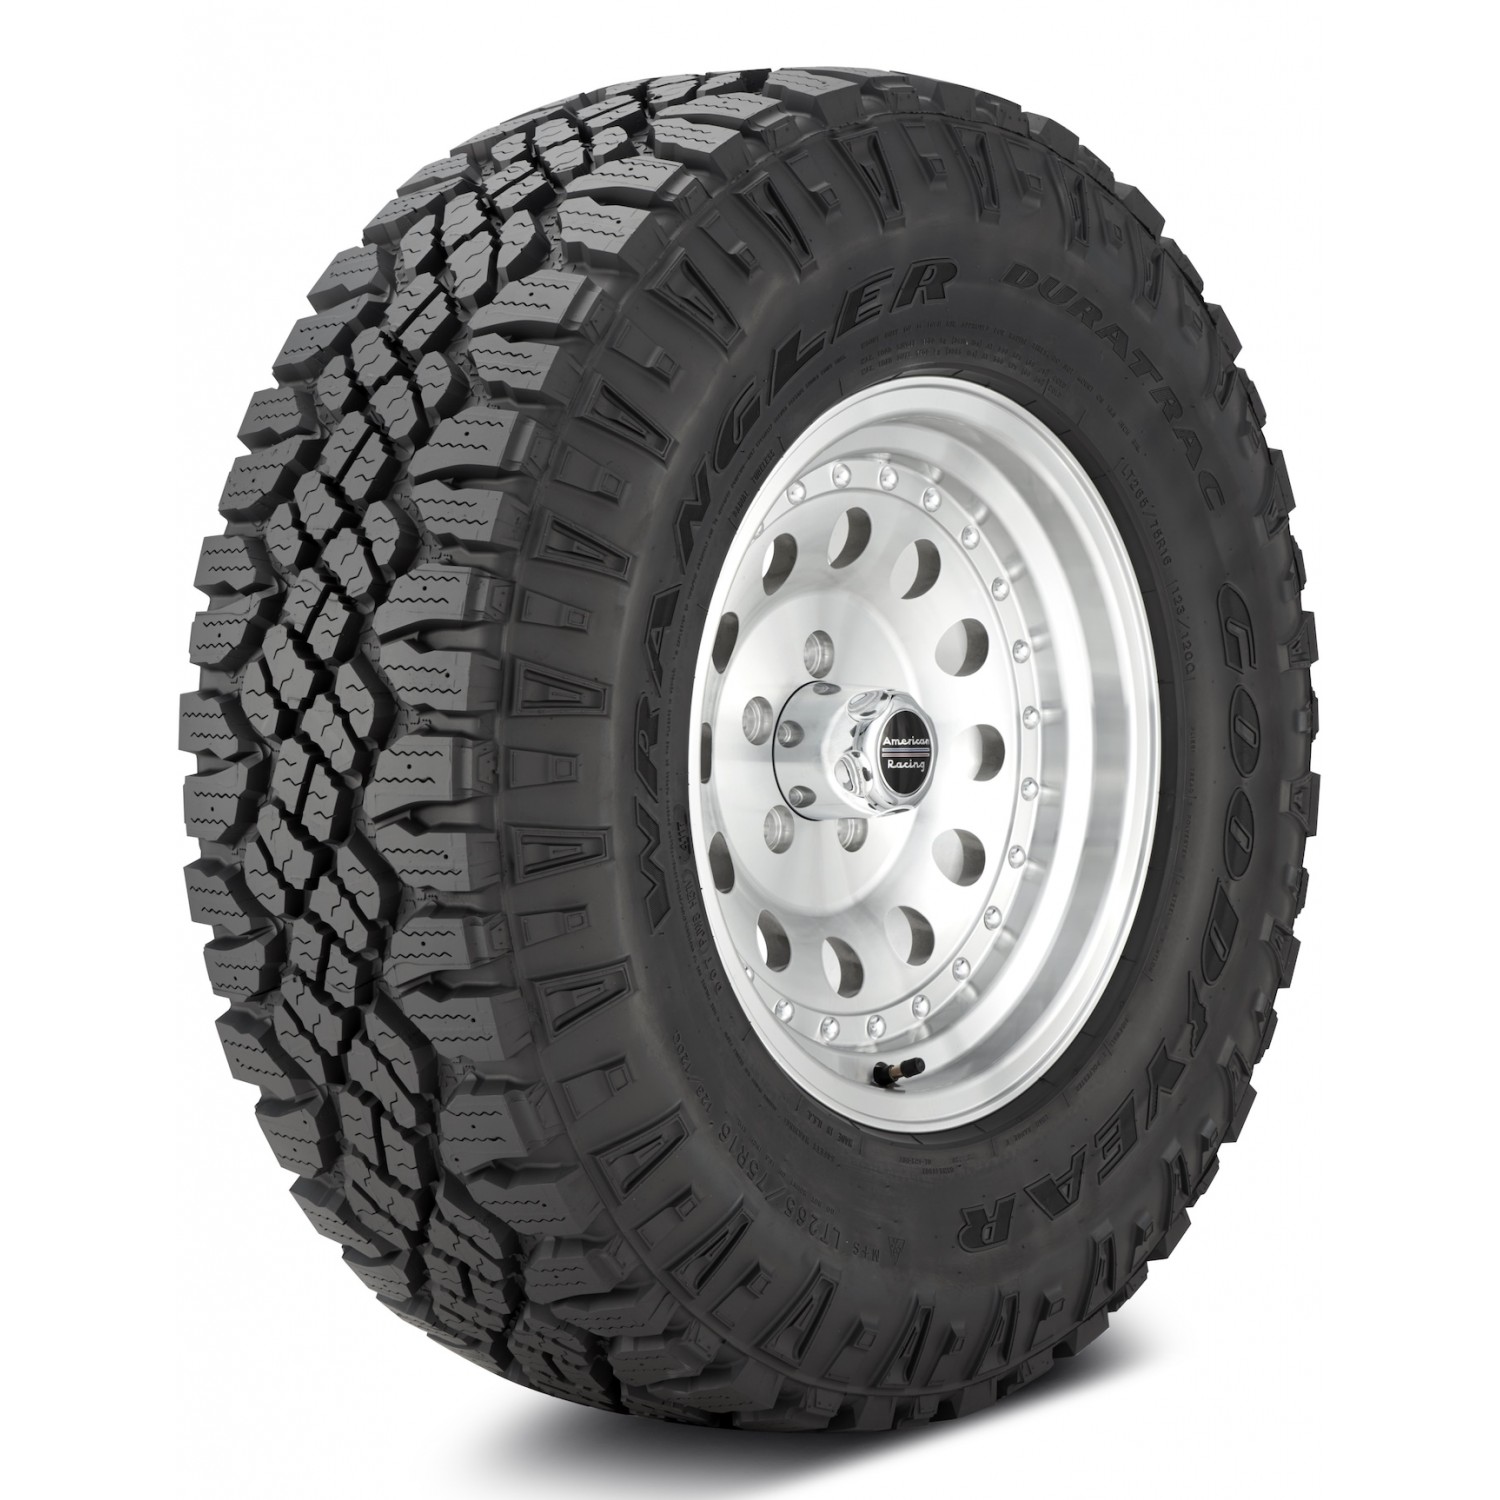 Goodyear Wrangler DuraTrac (P) Black Sidewall Tire (265/65R18 114S)  vzn121239